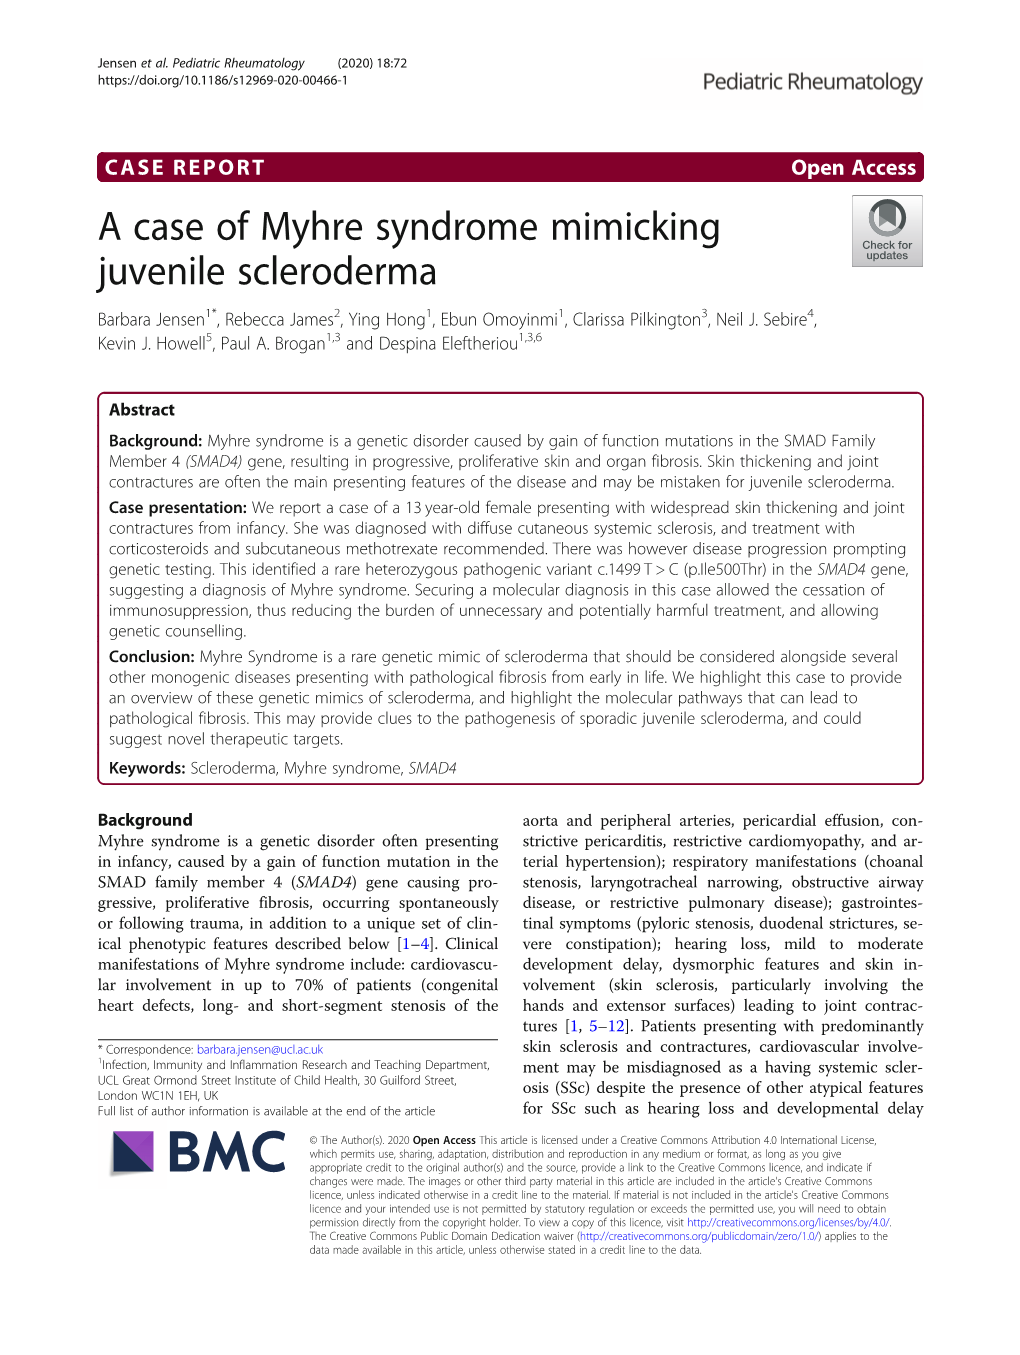 A Case of Myhre Syndrome Mimicking Juvenile Scleroderma Barbara Jensen1*, Rebecca James2, Ying Hong1, Ebun Omoyinmi1, Clarissa Pilkington3, Neil J